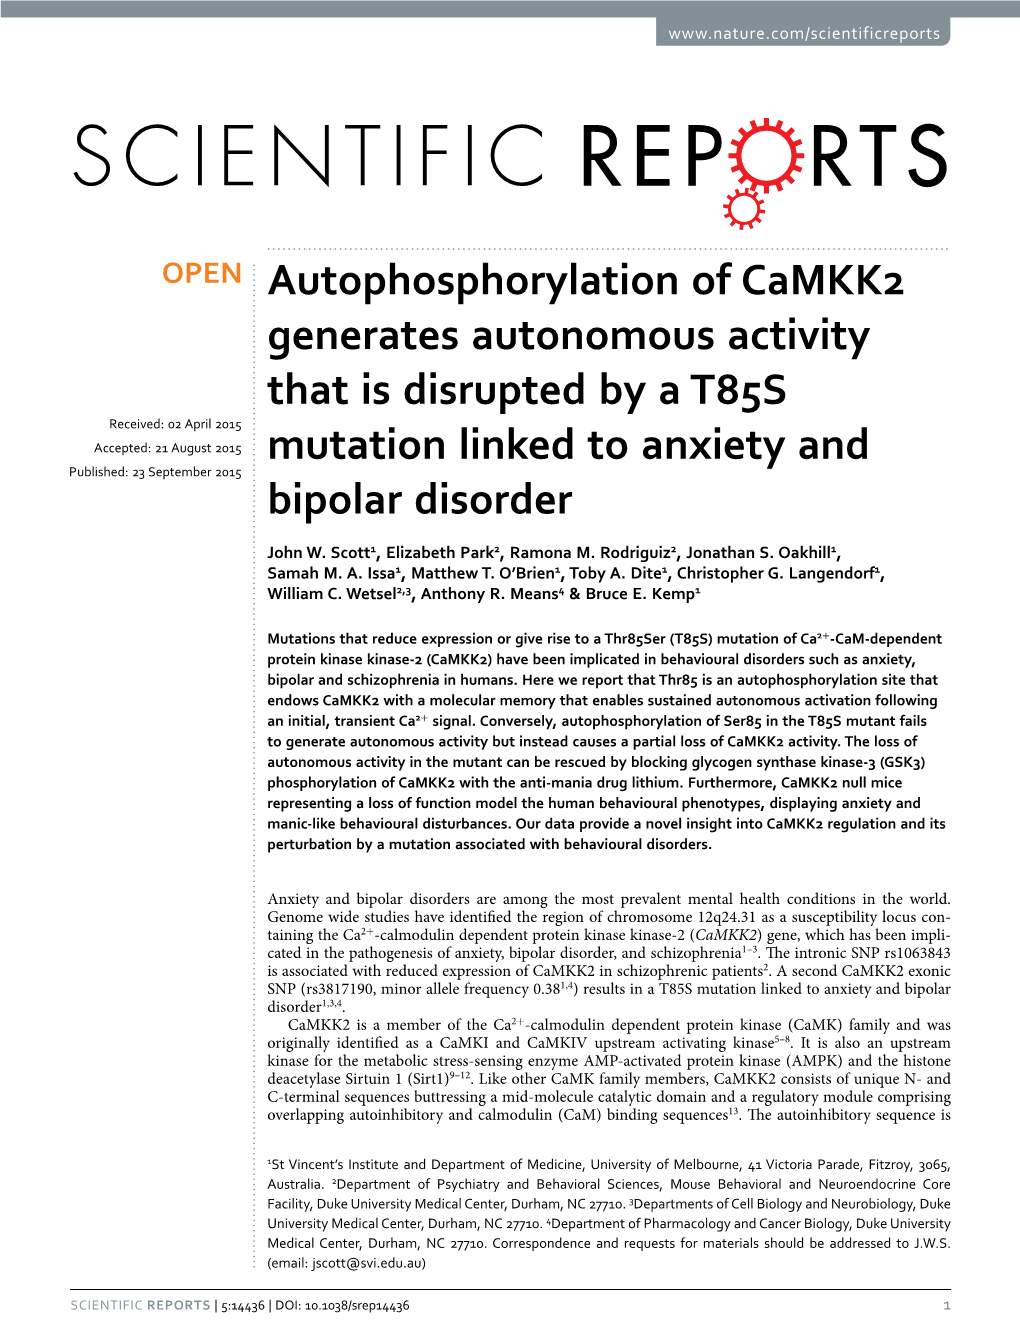 Autophosphorylation of Camkk2 Generates Autonomous Activity That